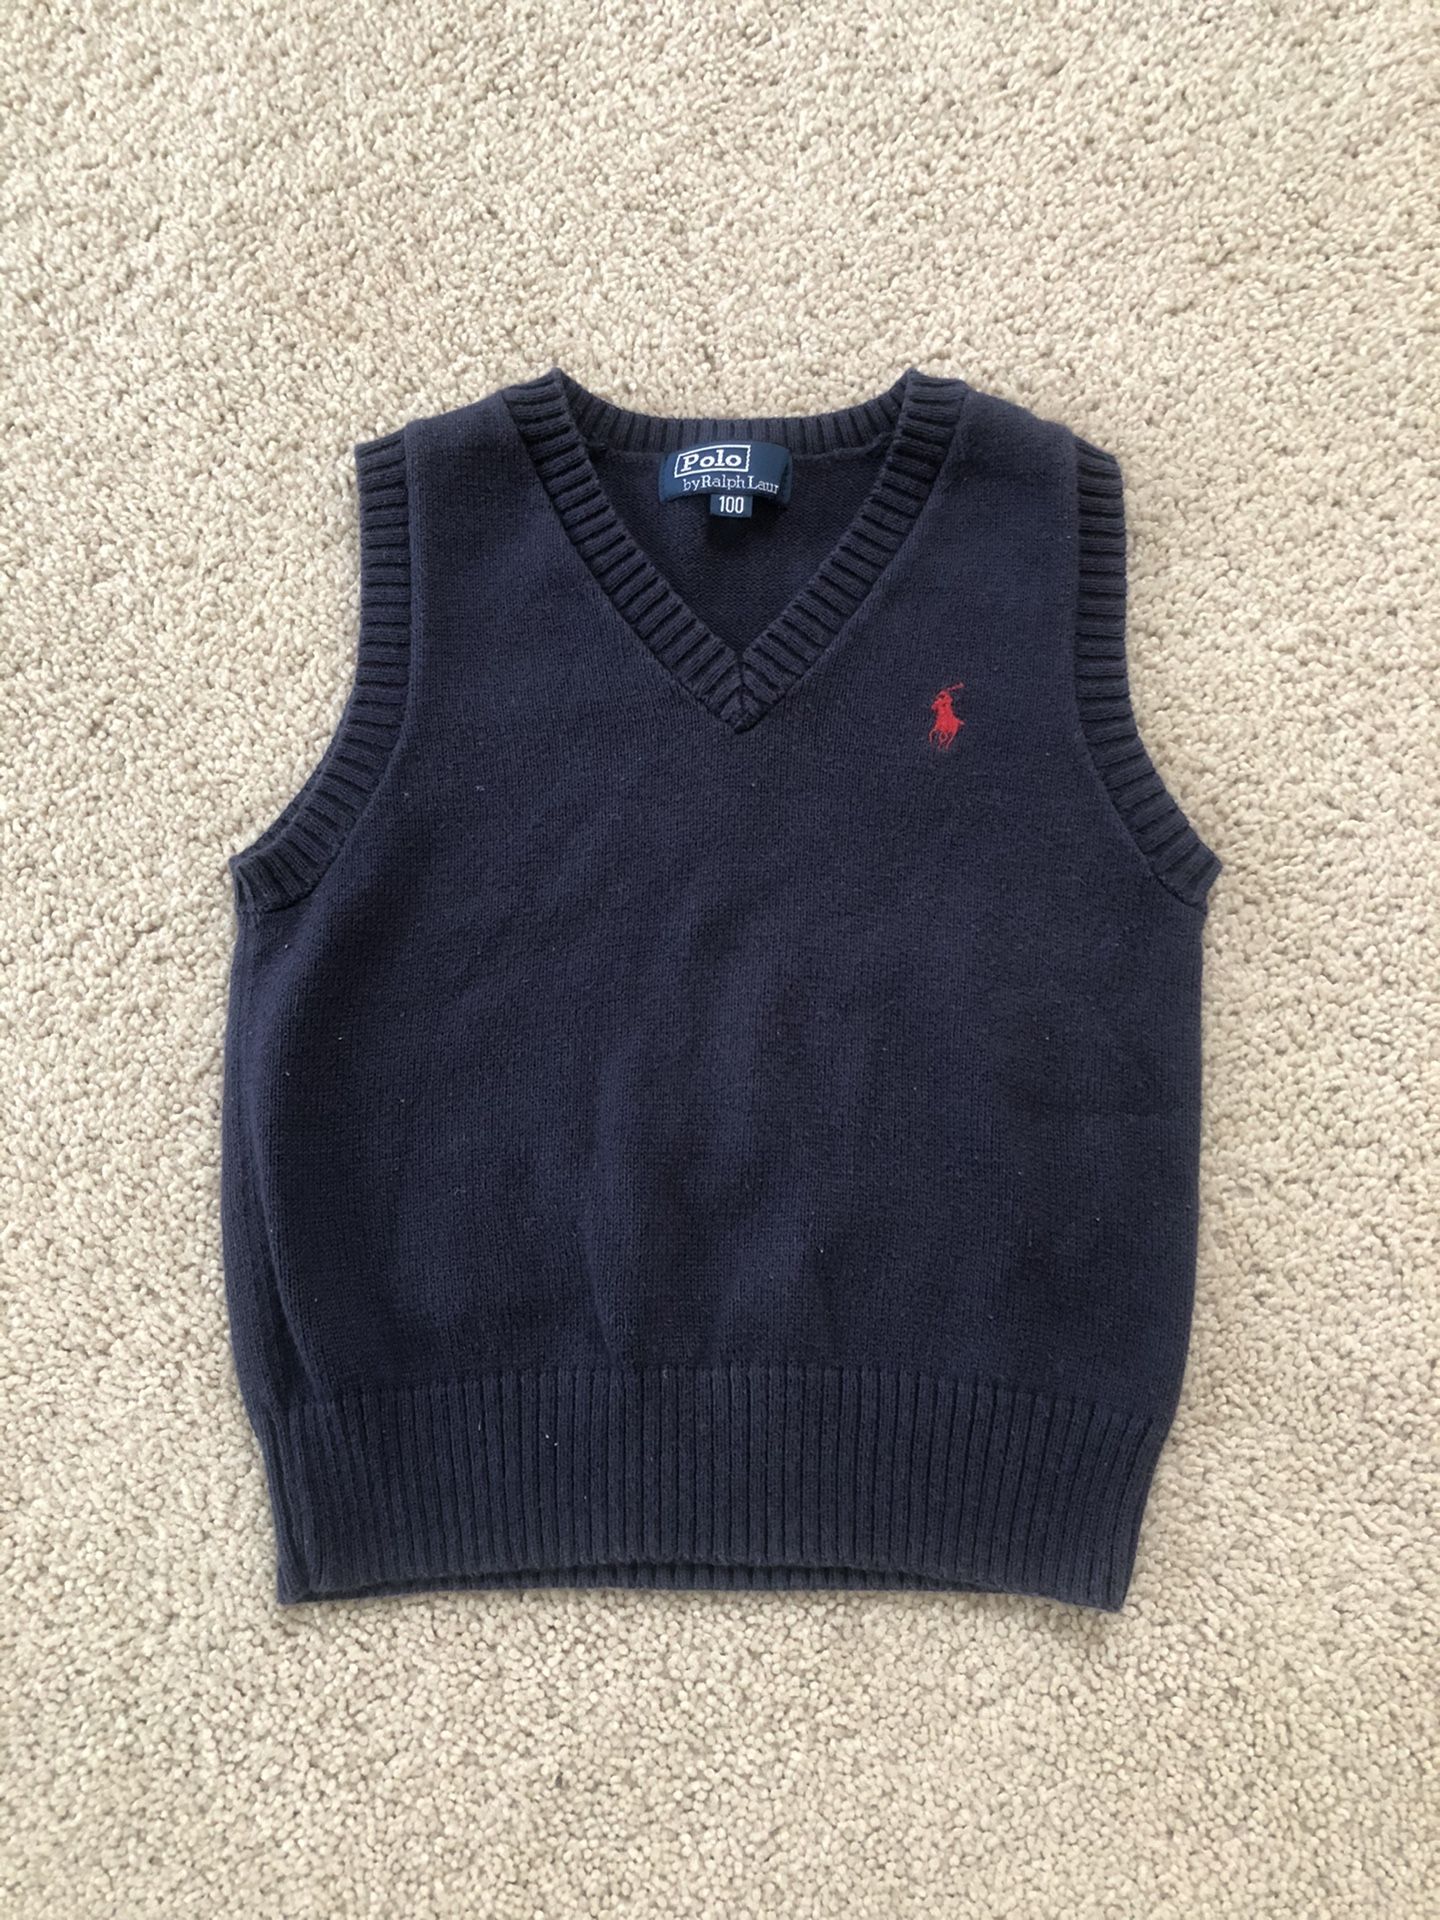 3T Boys Sweater Vest